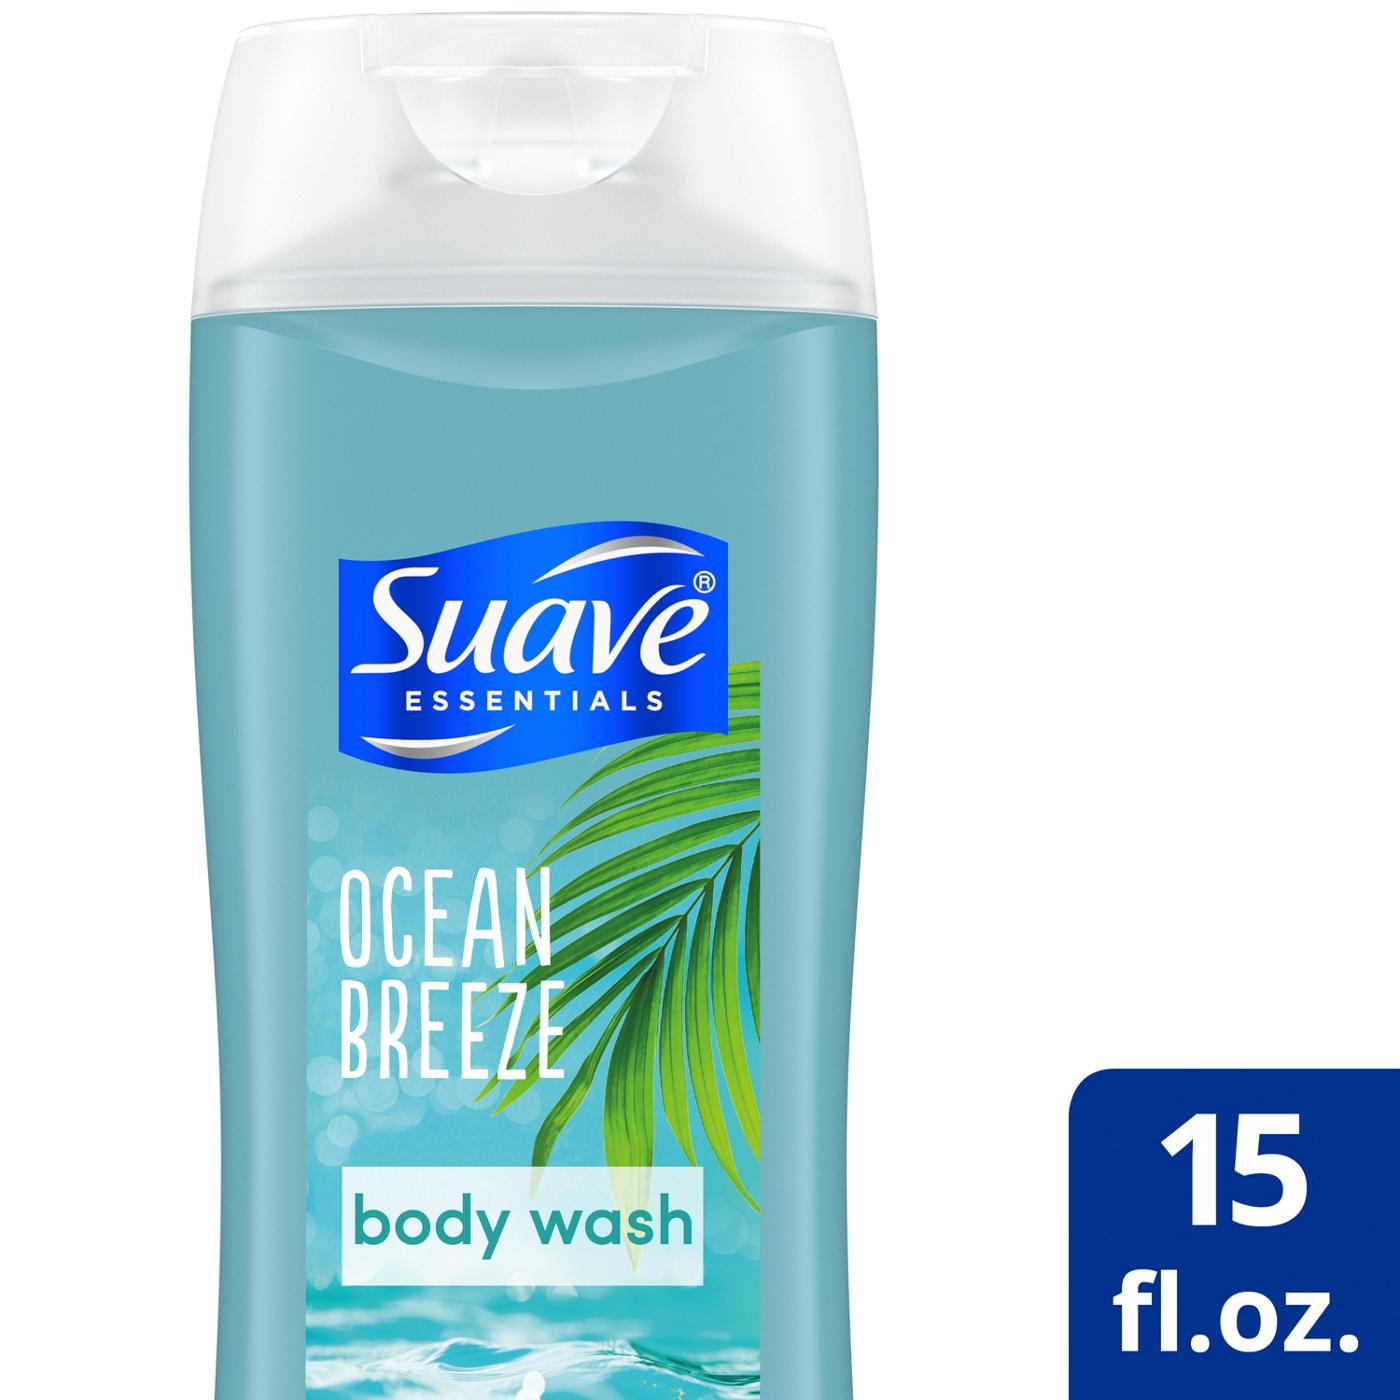 Suave Essentials Ocean Breeze Body Wash; image 2 of 10